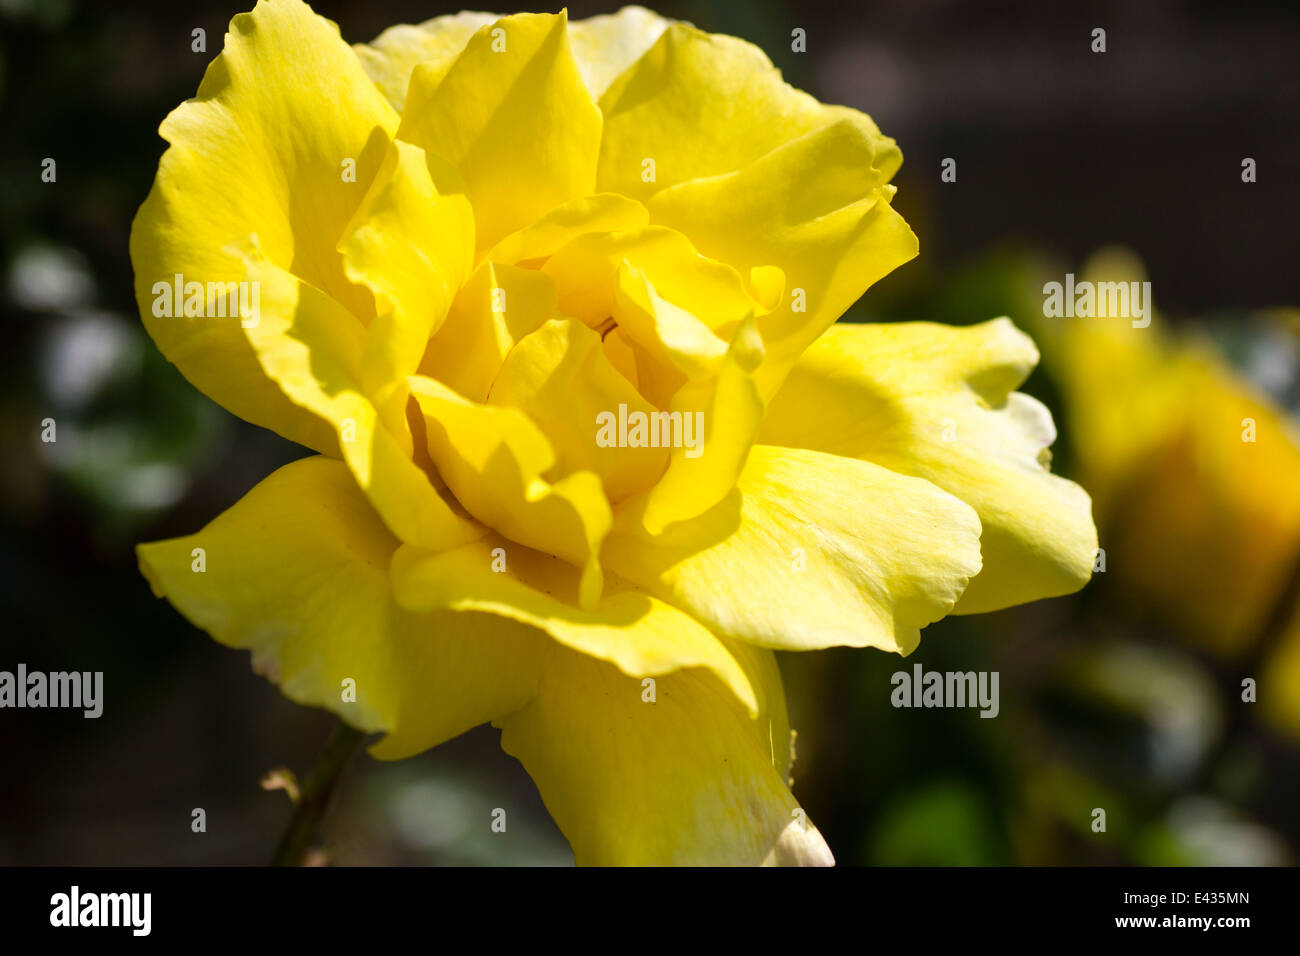 Single flower of the climbing rose, Rosa 'Golden Showers' Stock Photo